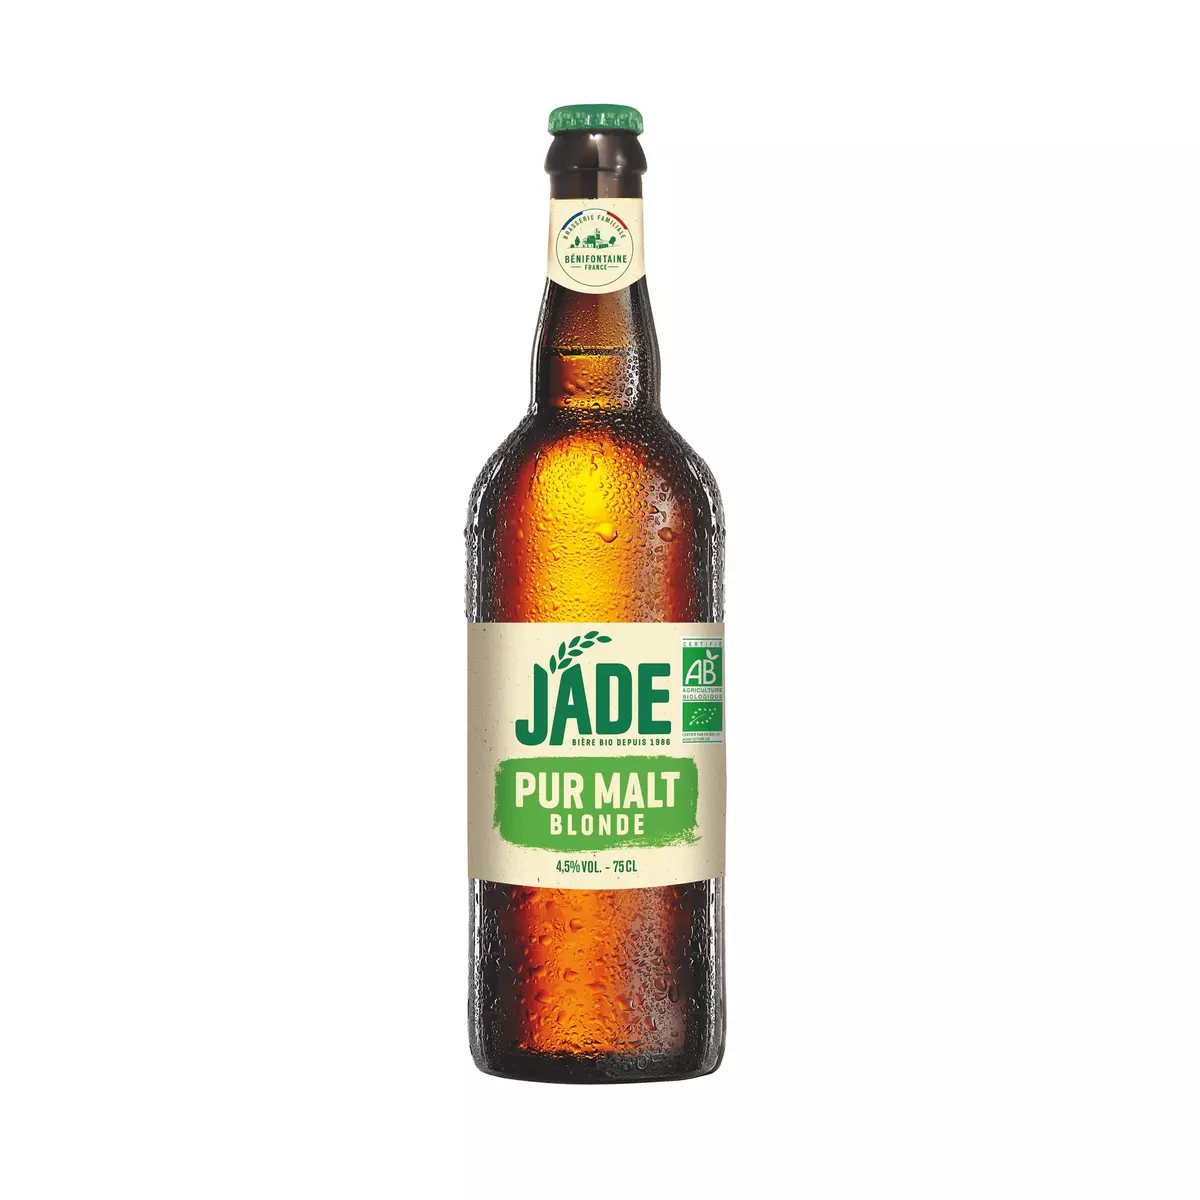 JADE Bière blonde bio pure malt 4.5% 75cl